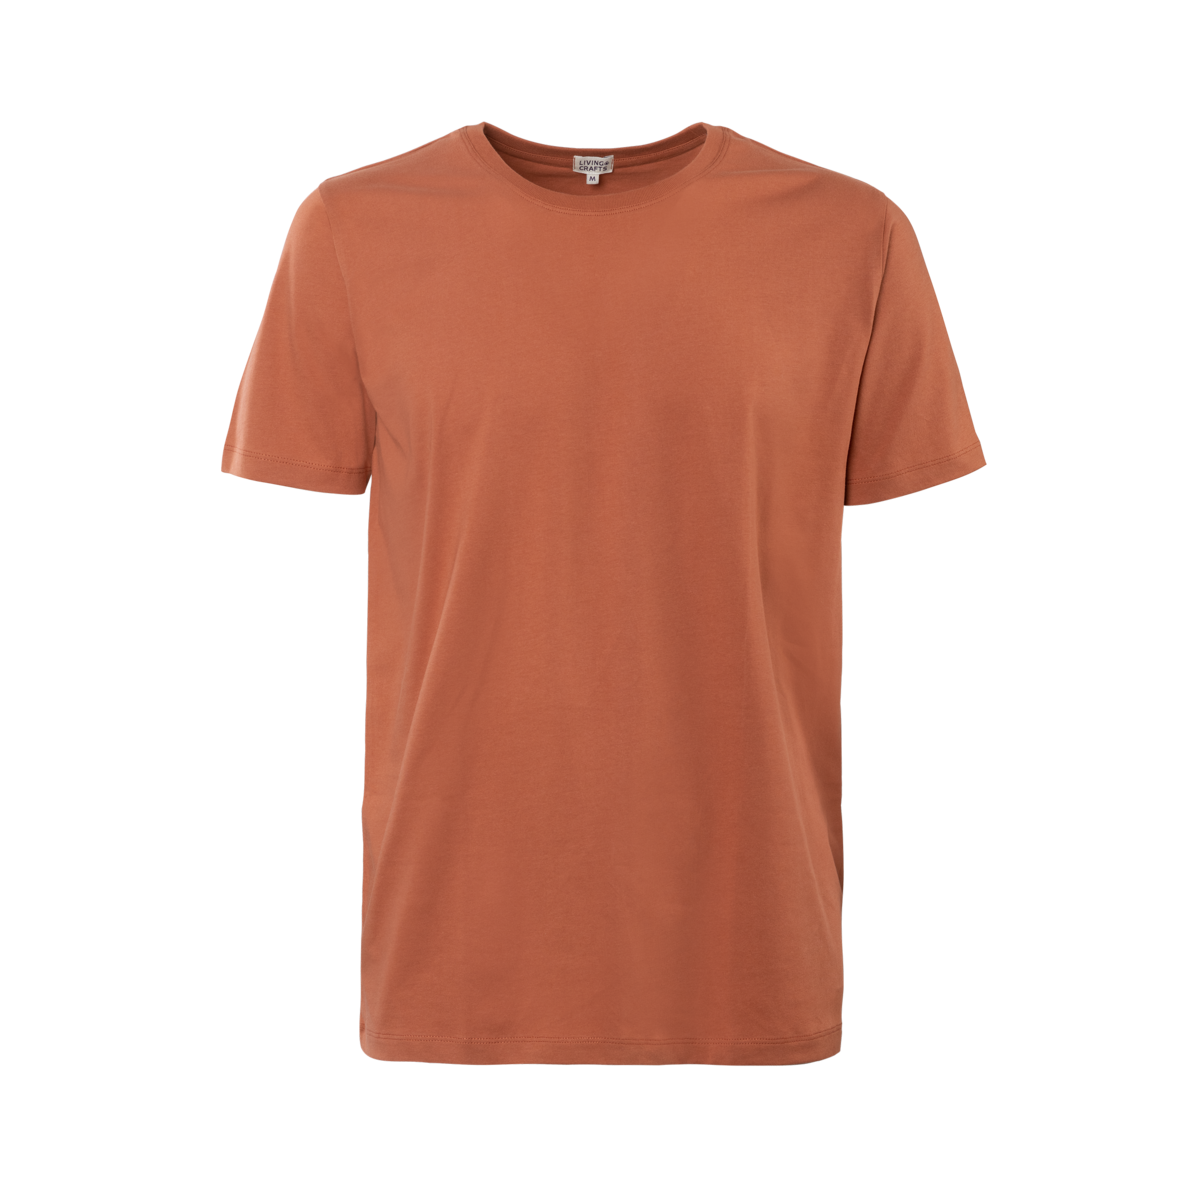 Brown T-shirt, ILKO